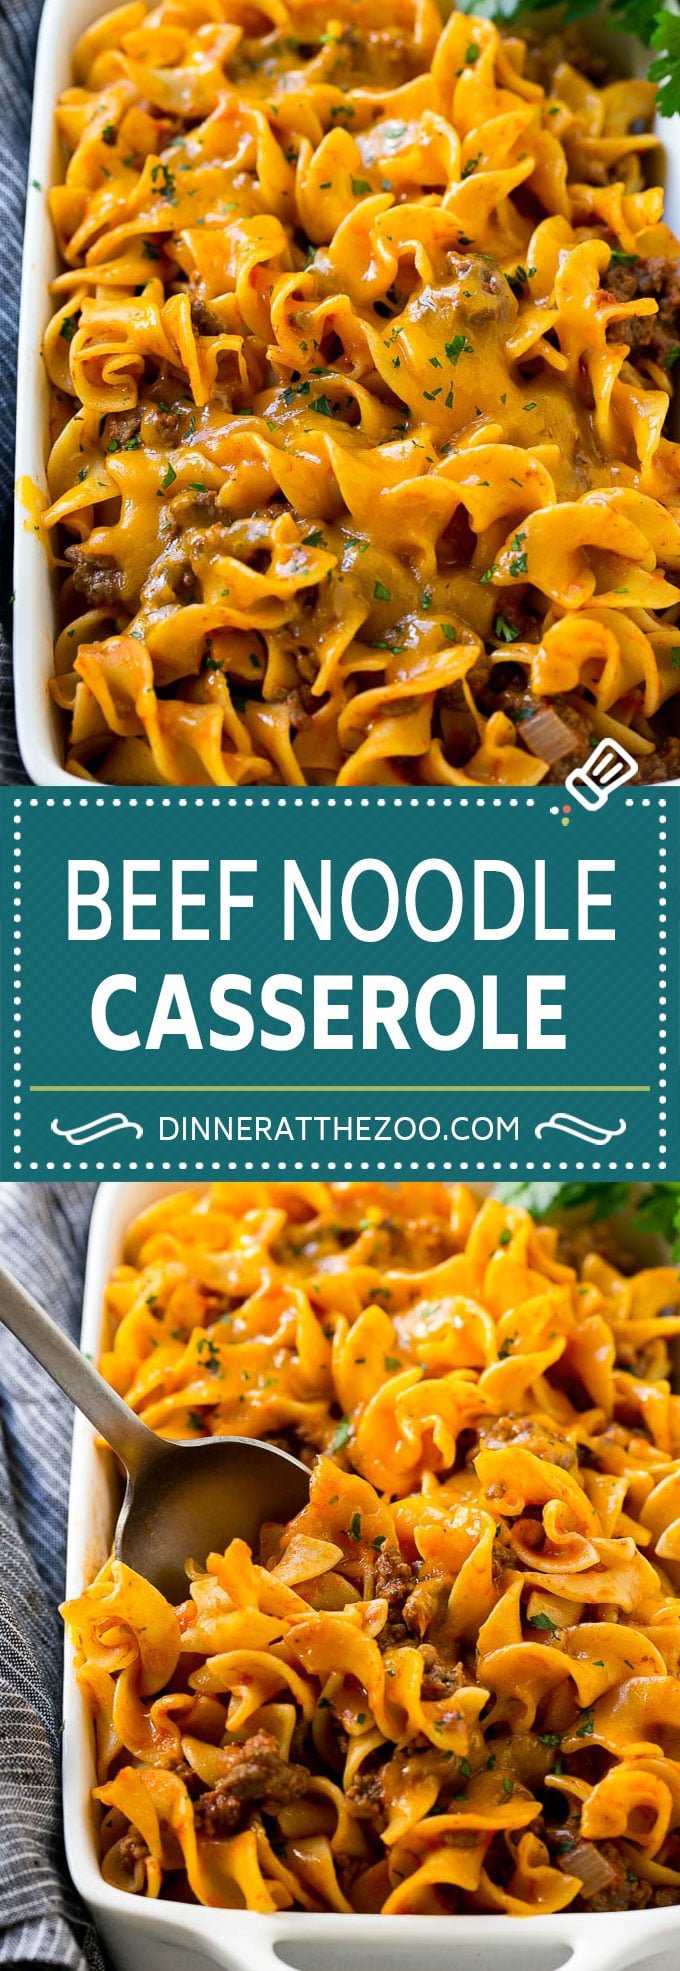 Beef Noodle Casserole Recipe | Ground Beef Casserole | Beef and Egg Noodles #hamburger #beef #noodles #casserole #dinner #dinneratthezoo